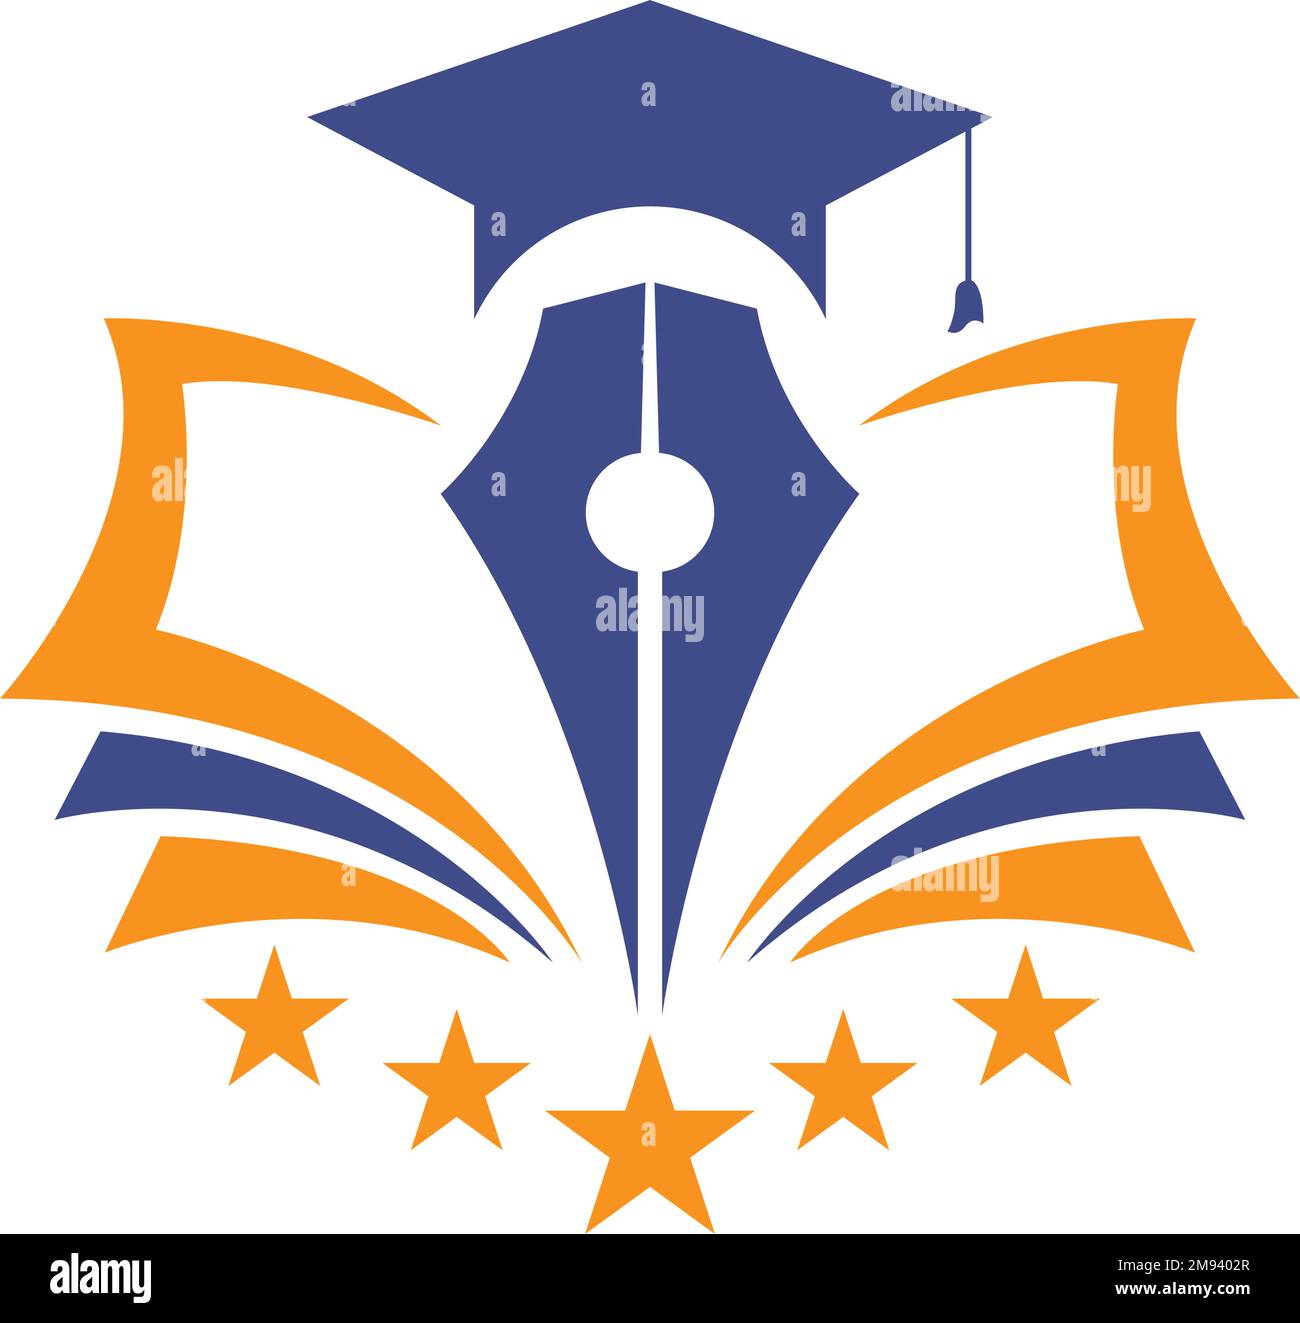 Education school logo design illustration Stock Vector Image & Art - Alamy